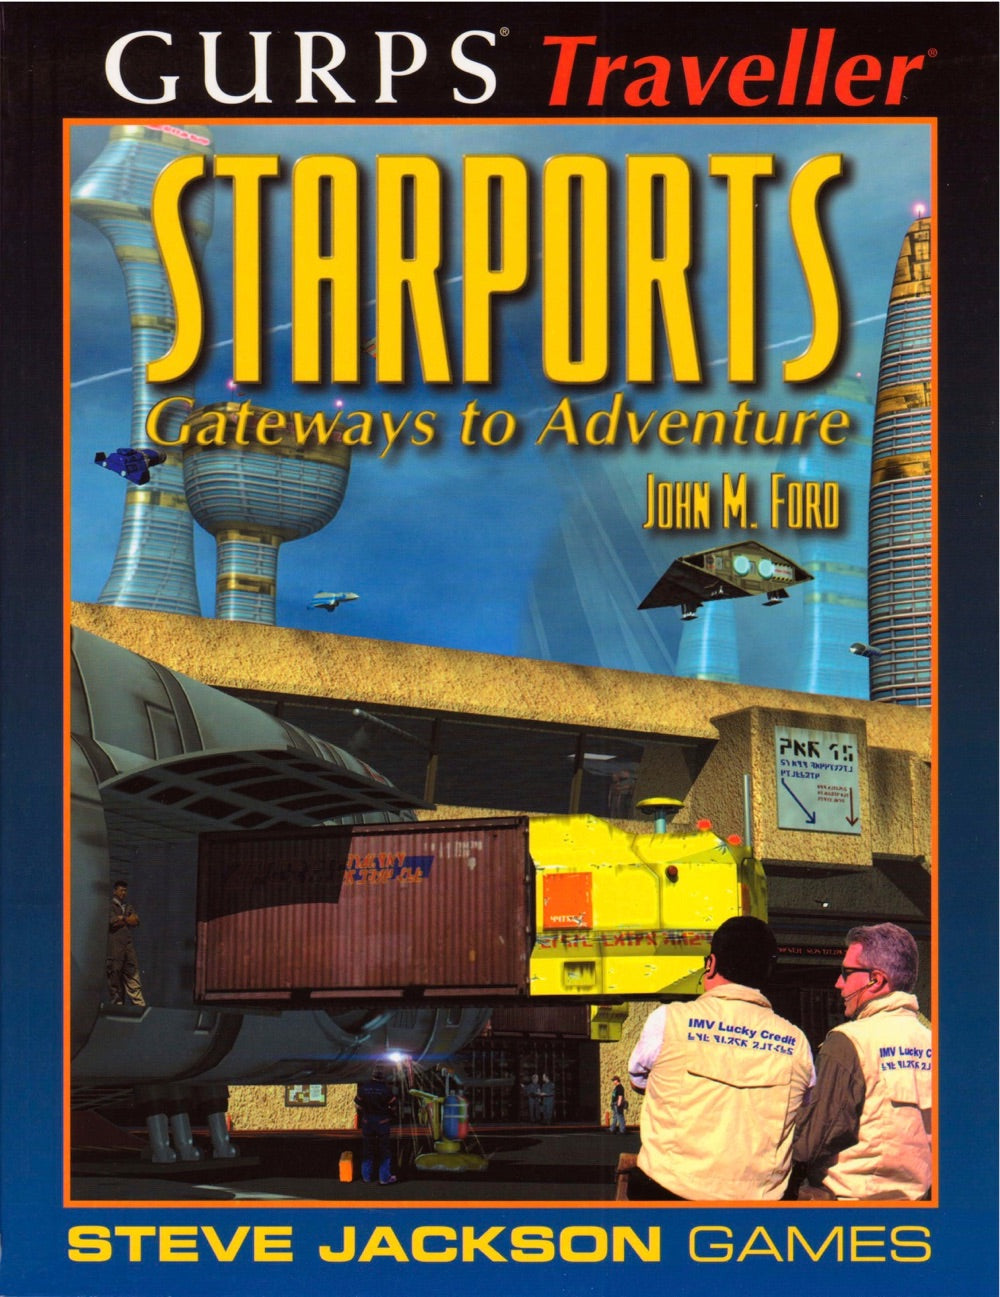 GURPS Traveller Classic: Starports